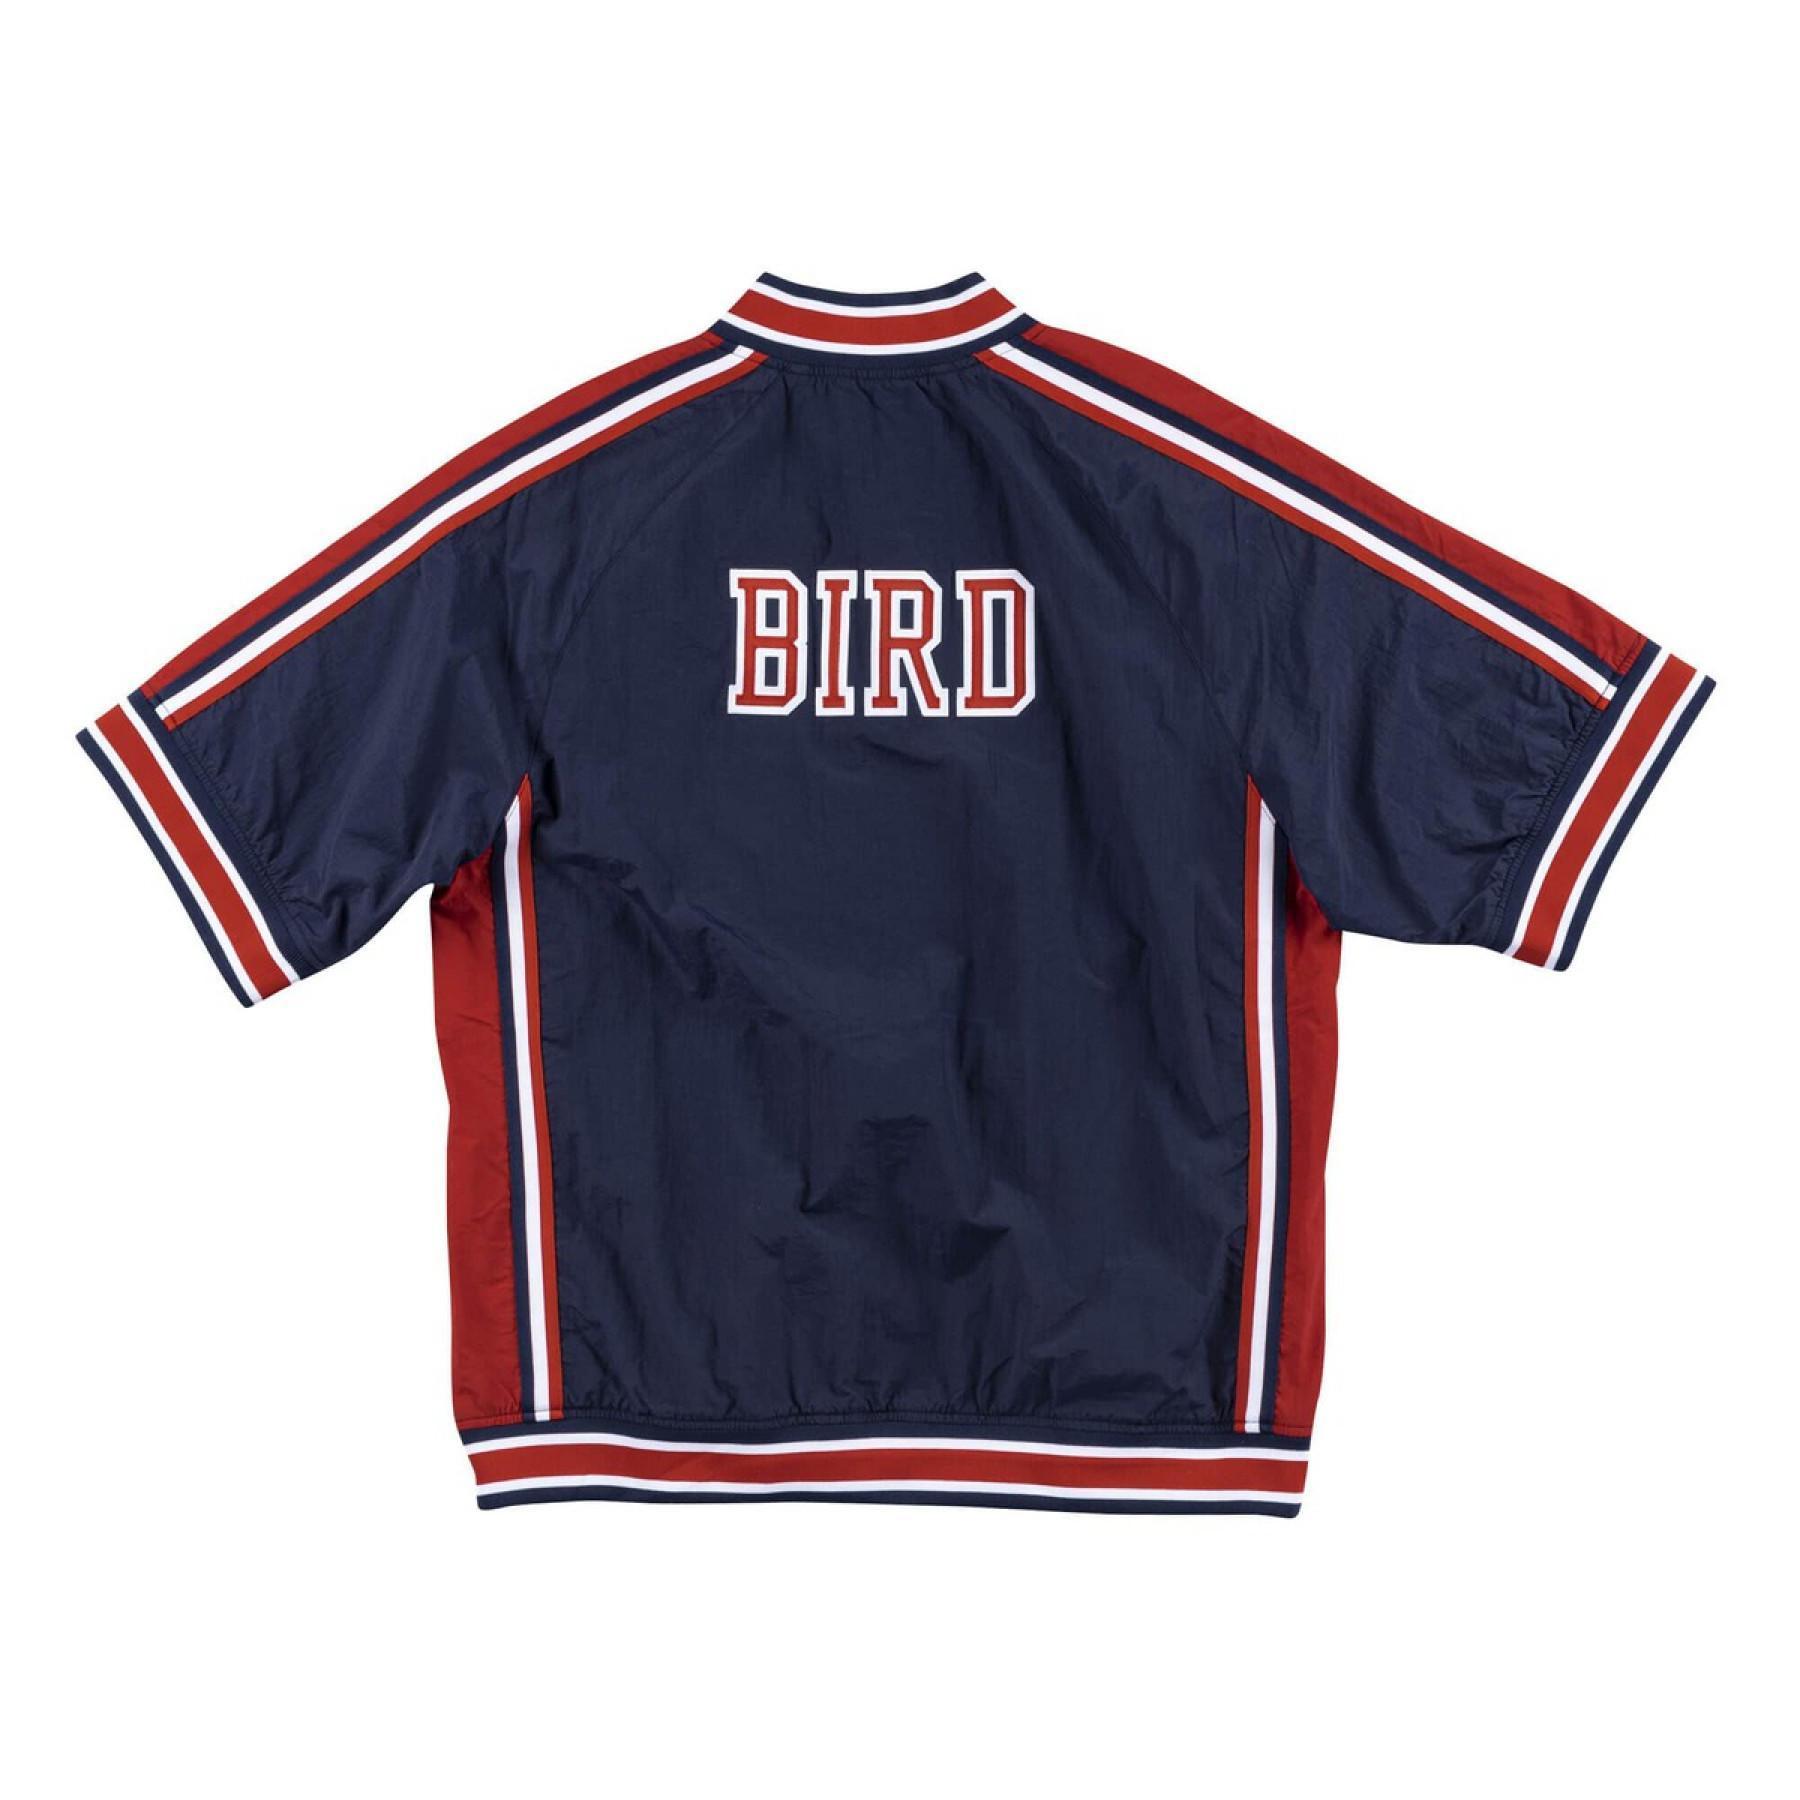 Veste Team USA authentic Larry Bird